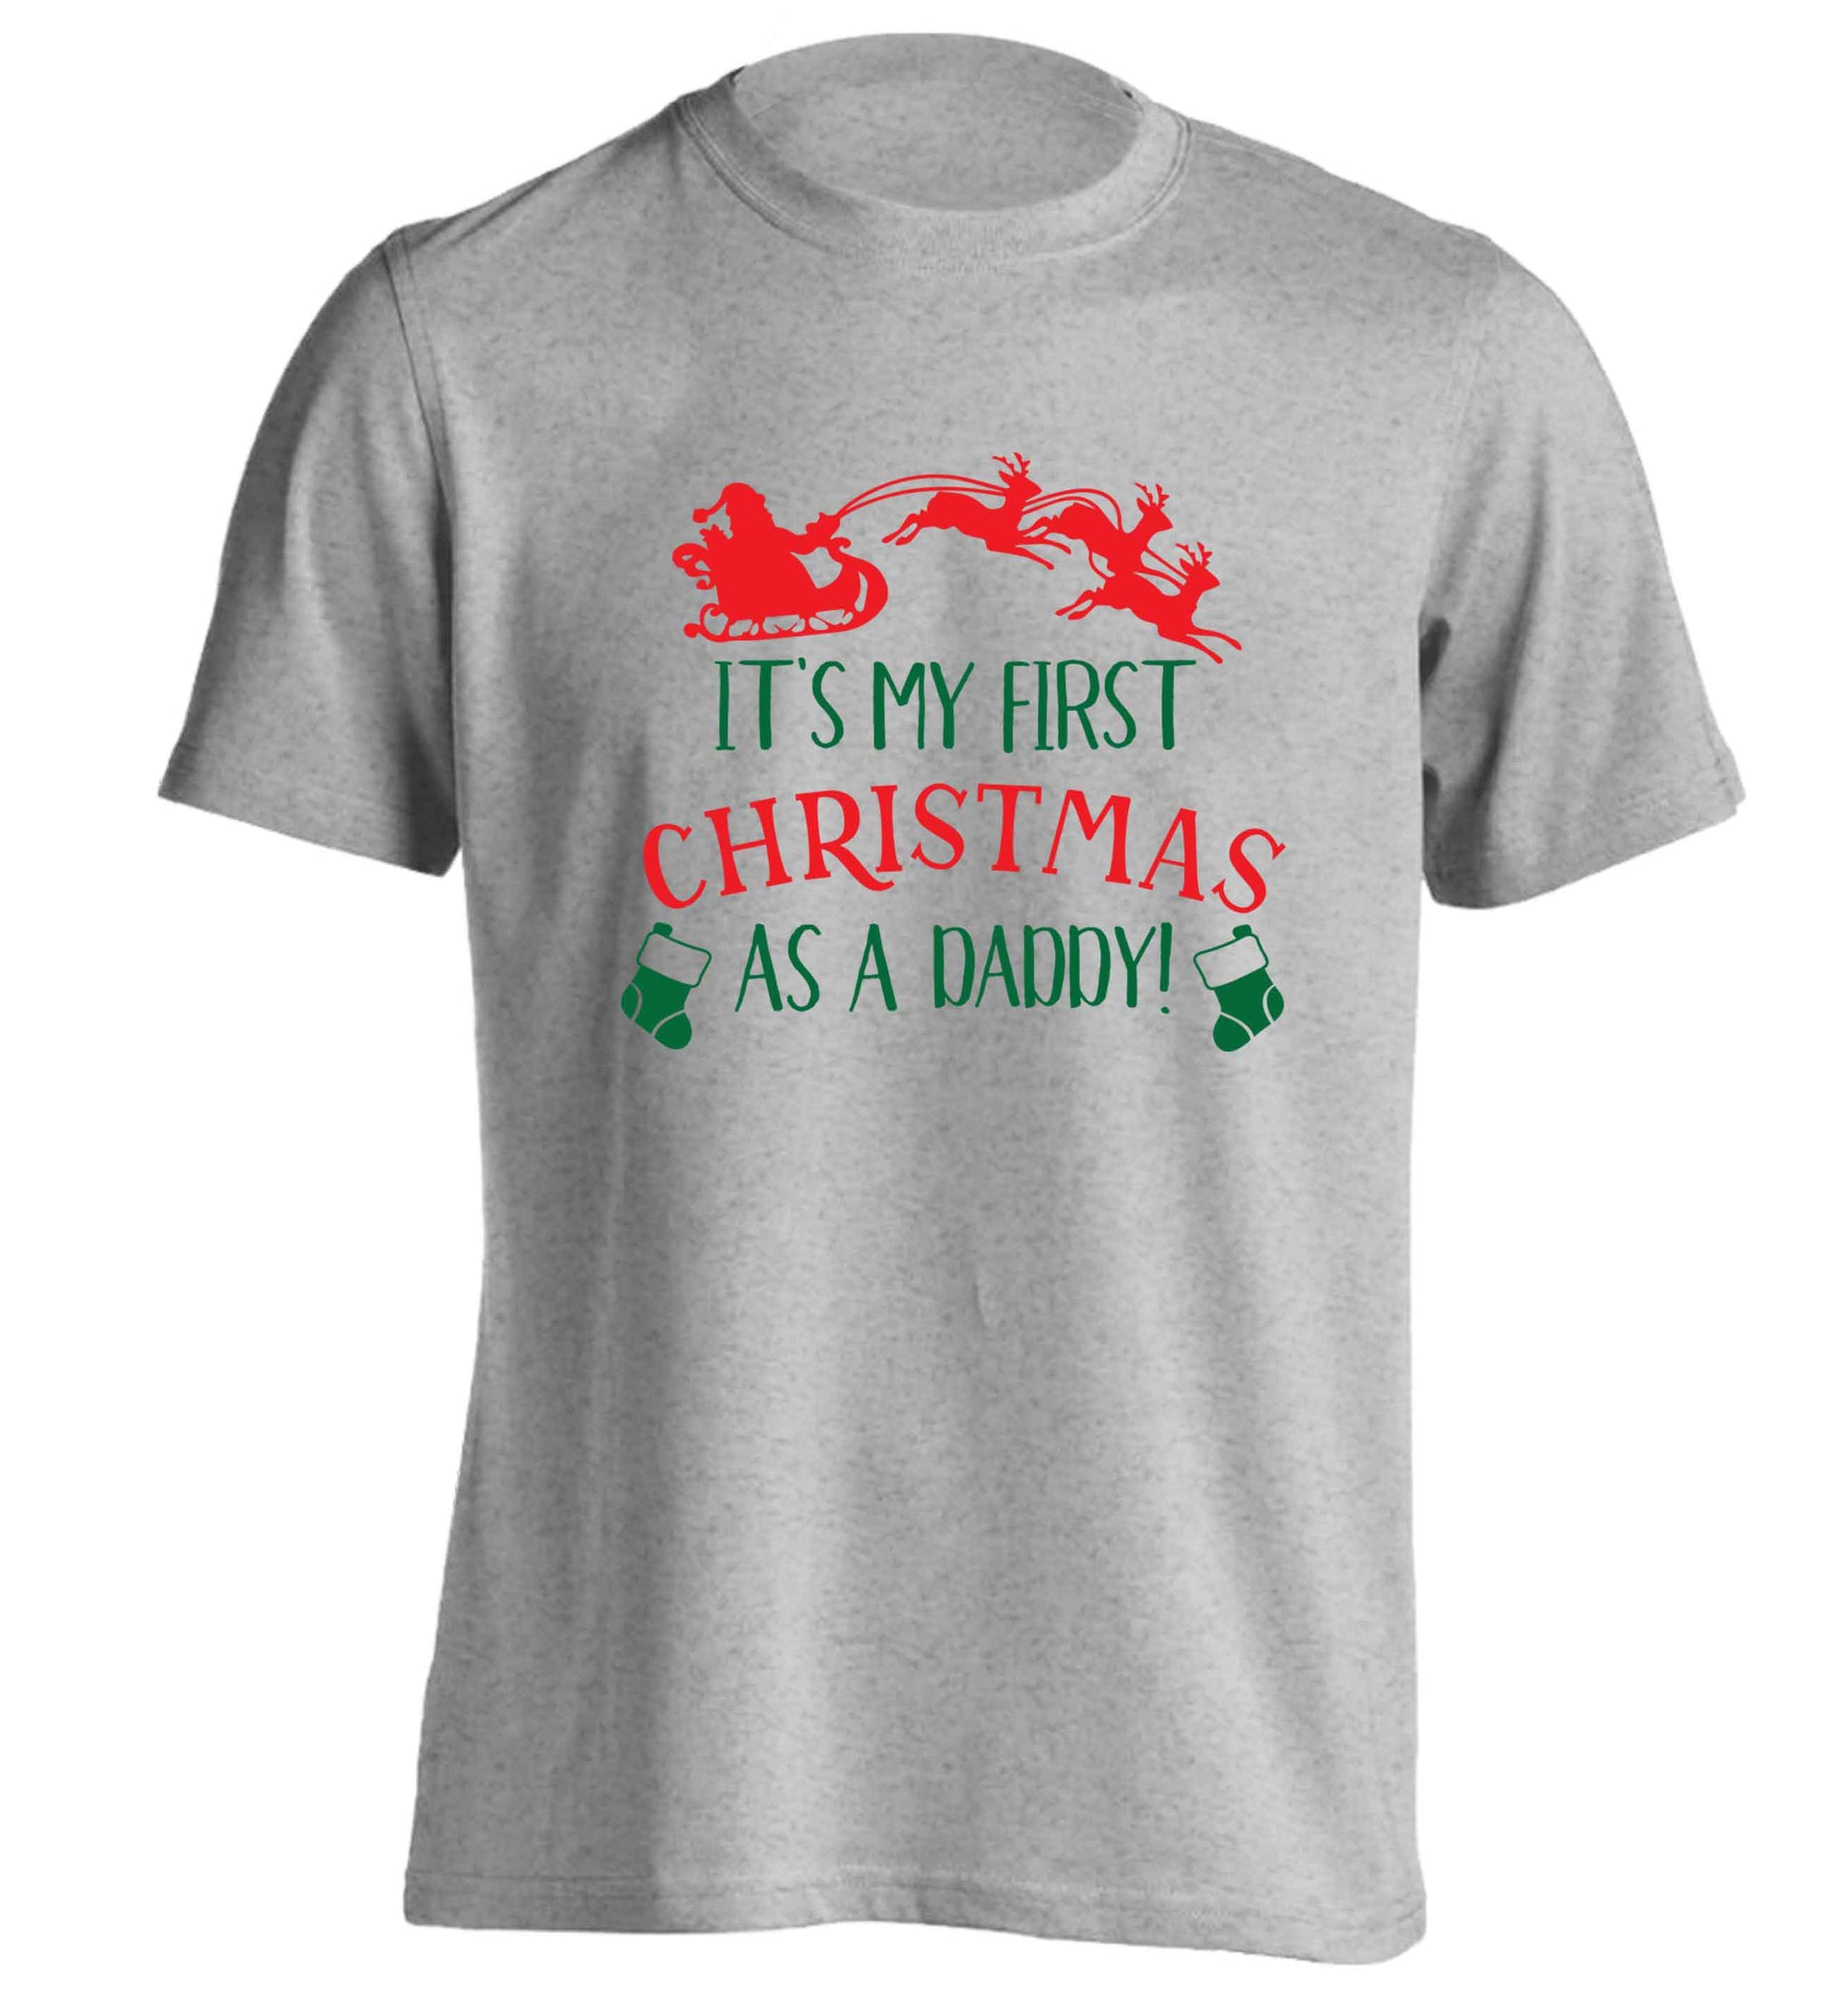 It's my first Christmas as a daddy adults unisex grey Tshirt 2XL